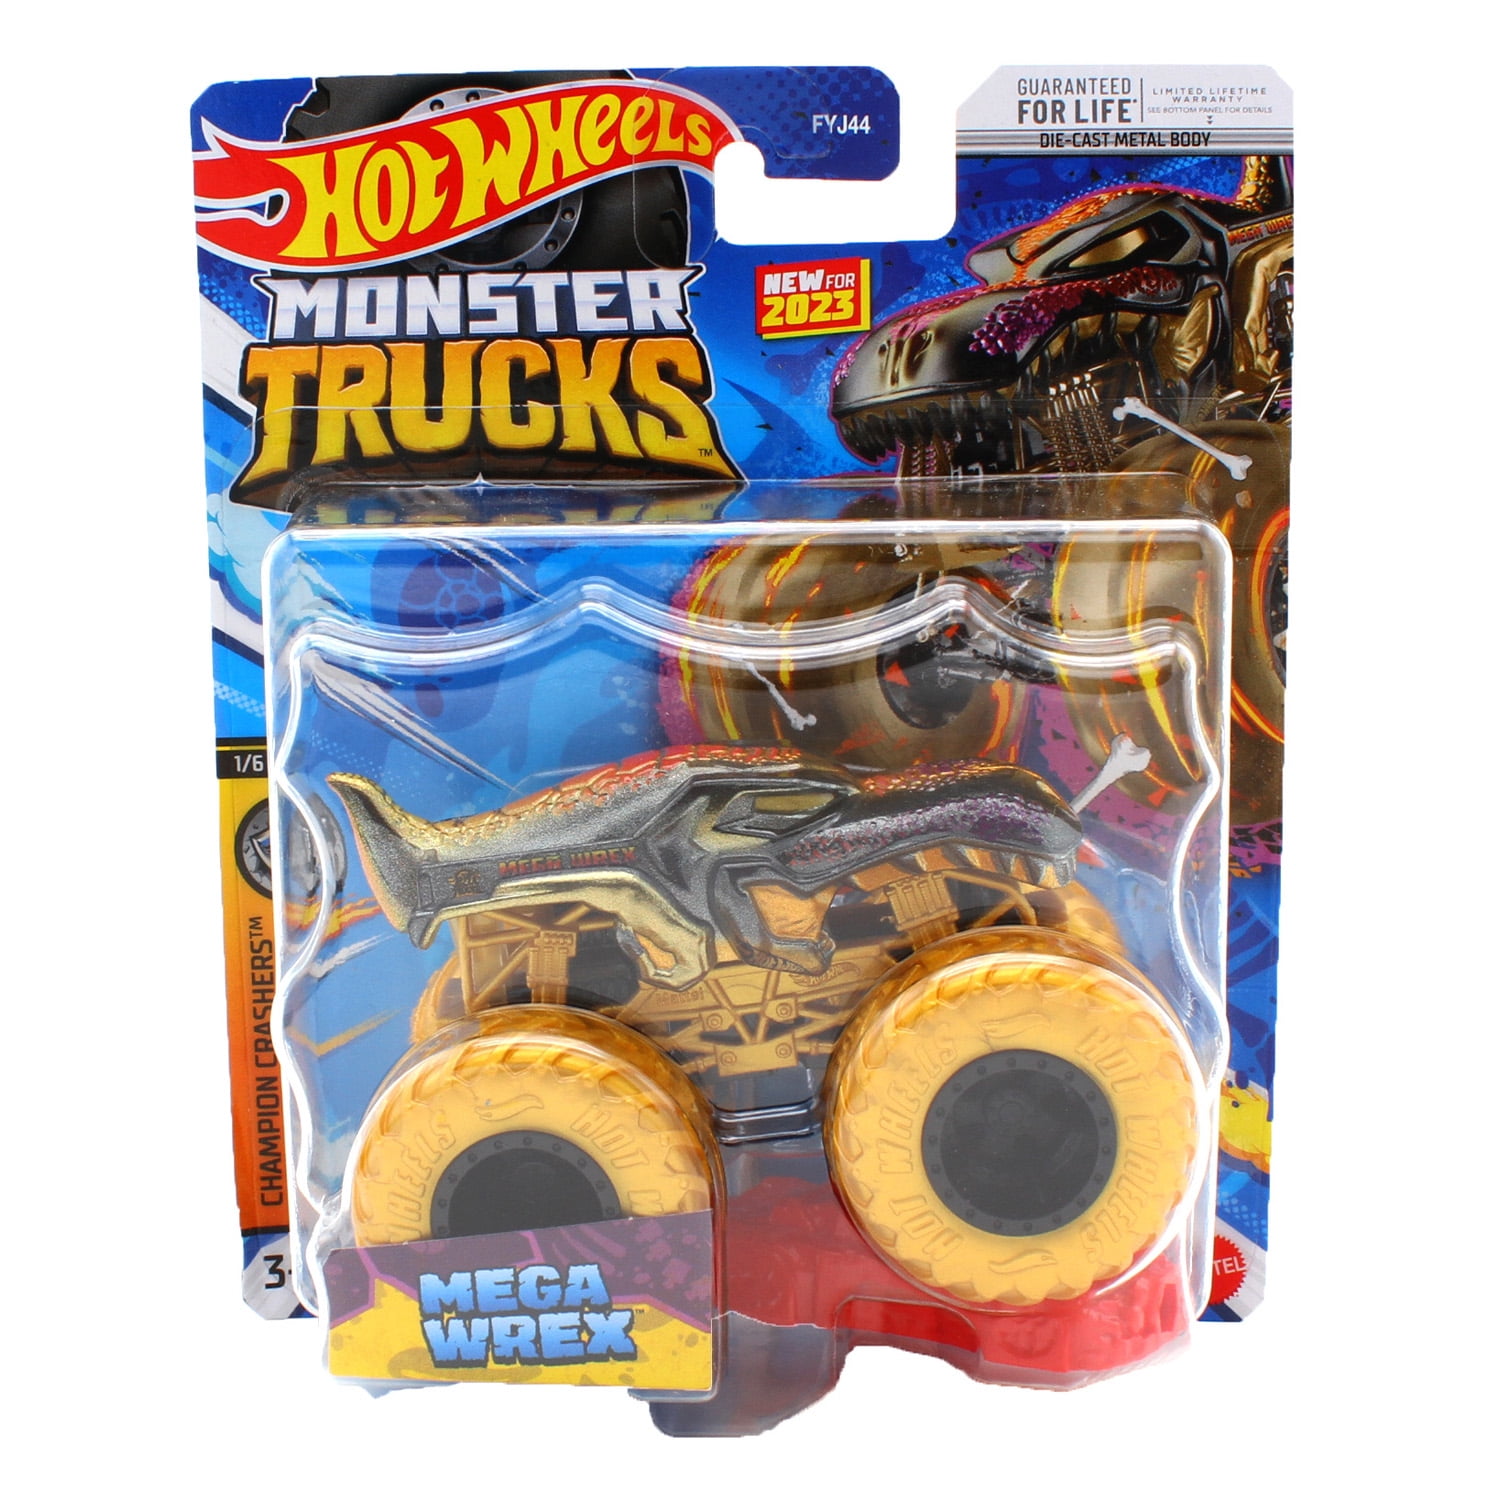  Hot Wheels Monster Trucks Mega Wrex, Connect and Crash